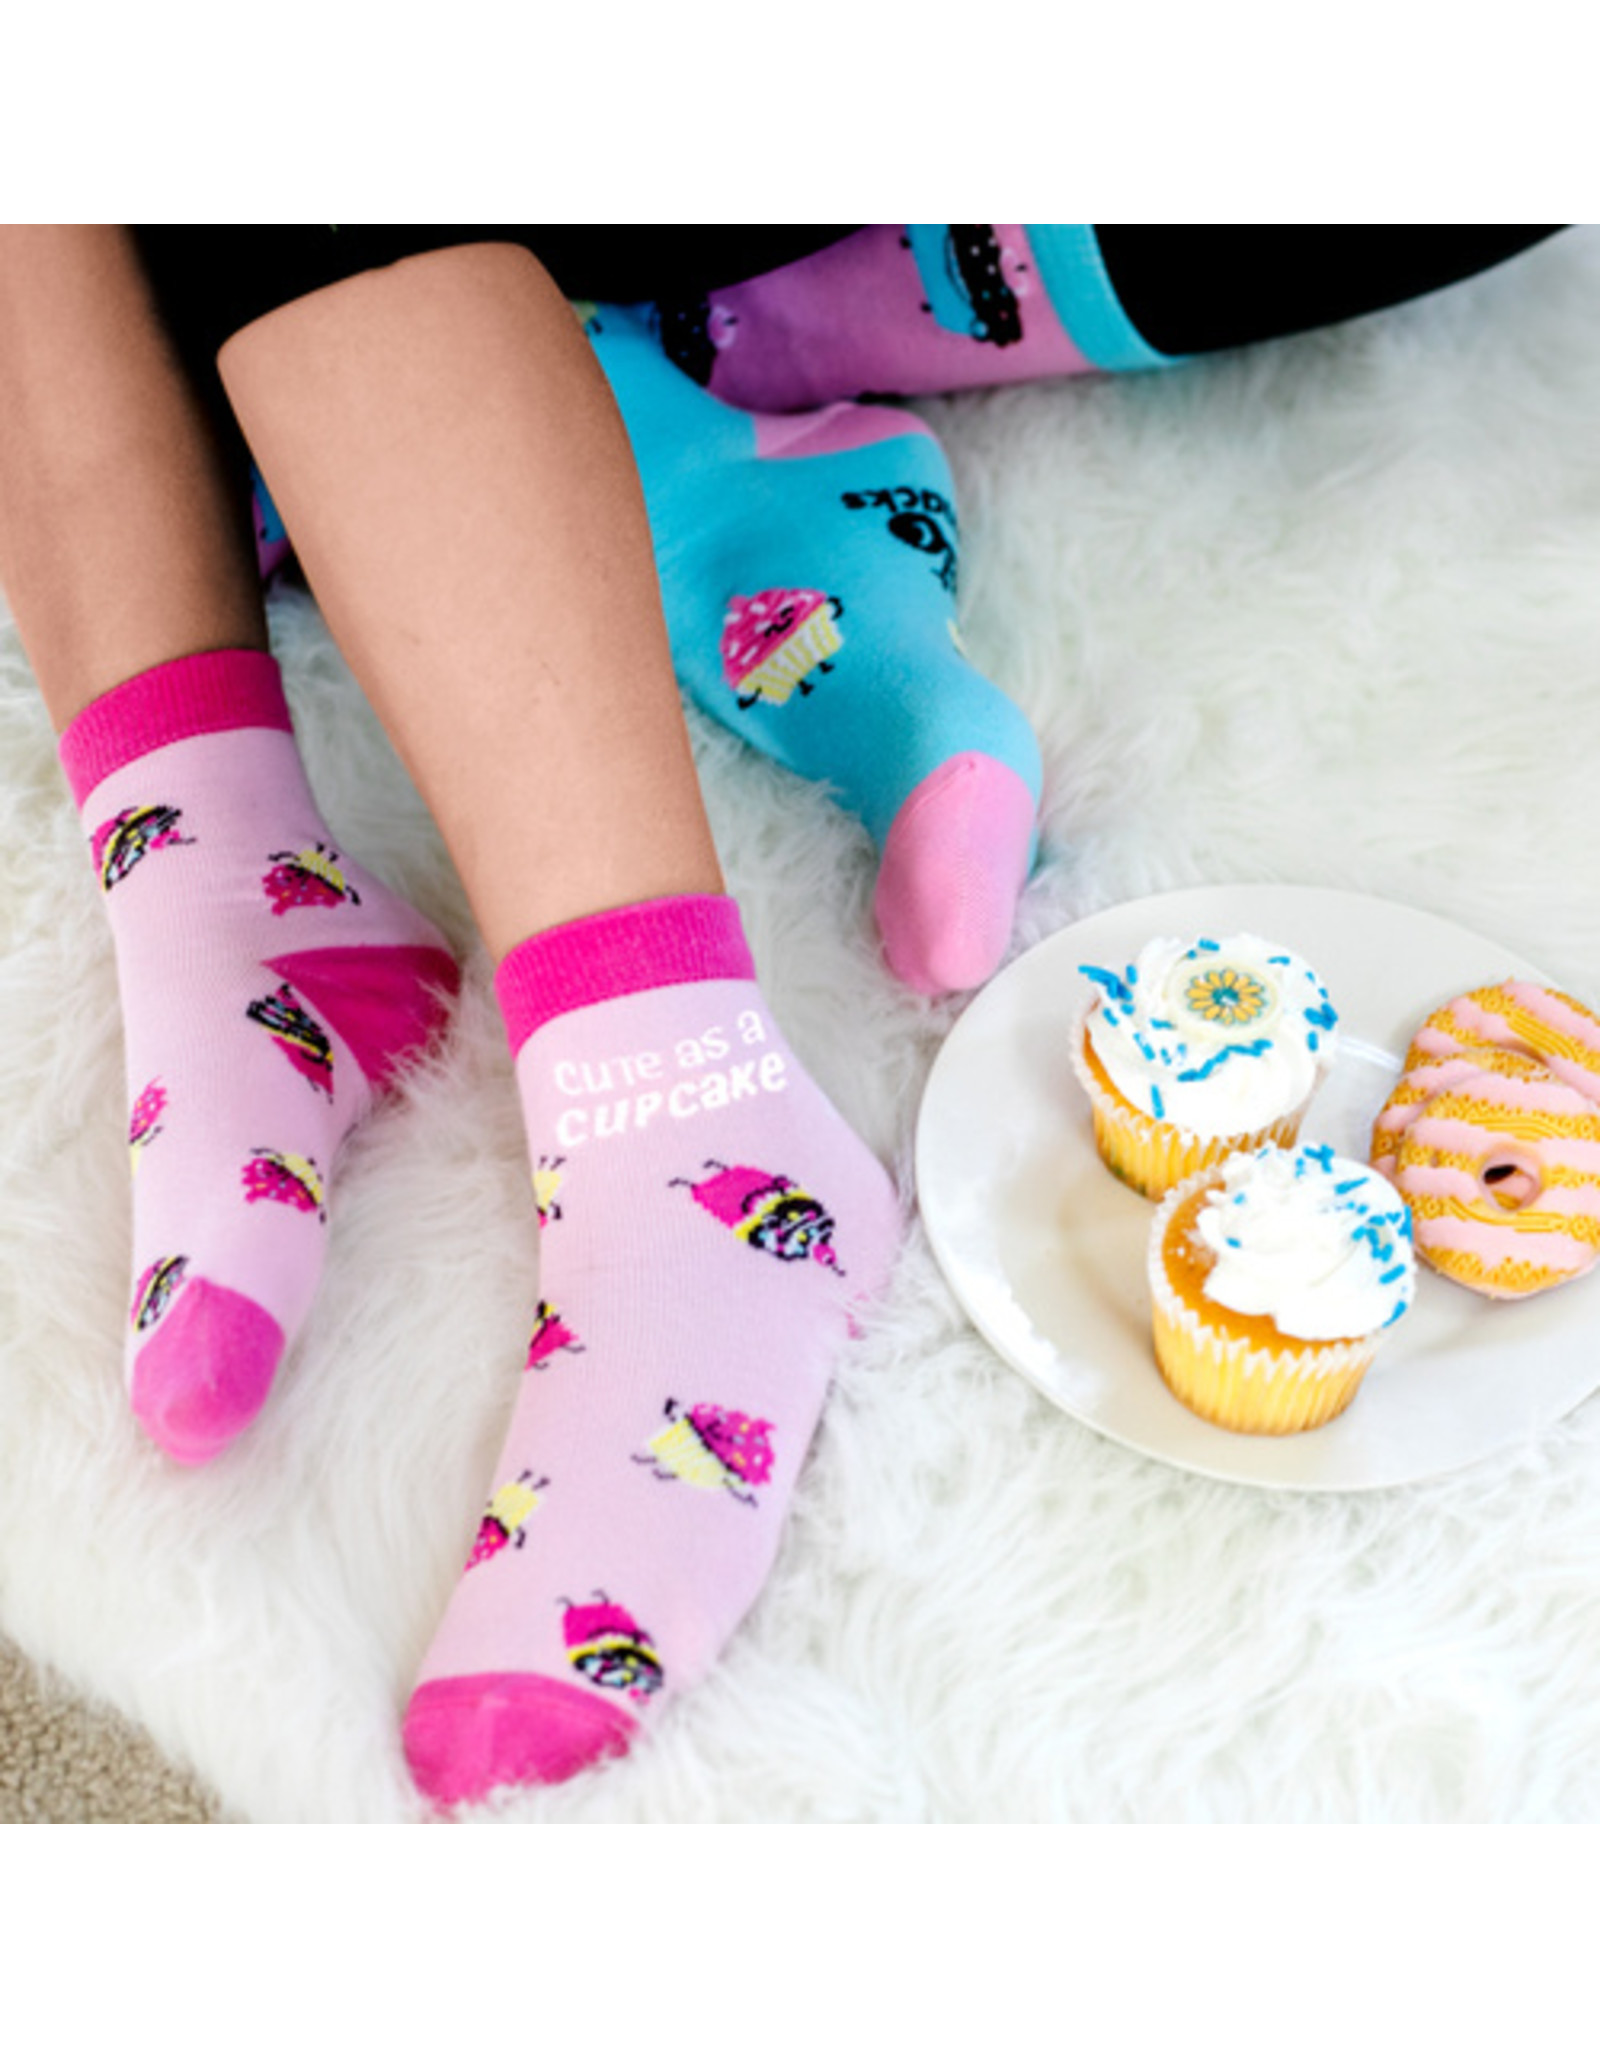 PGC "Cute as a Cupcake" Youth Socks (S/M)